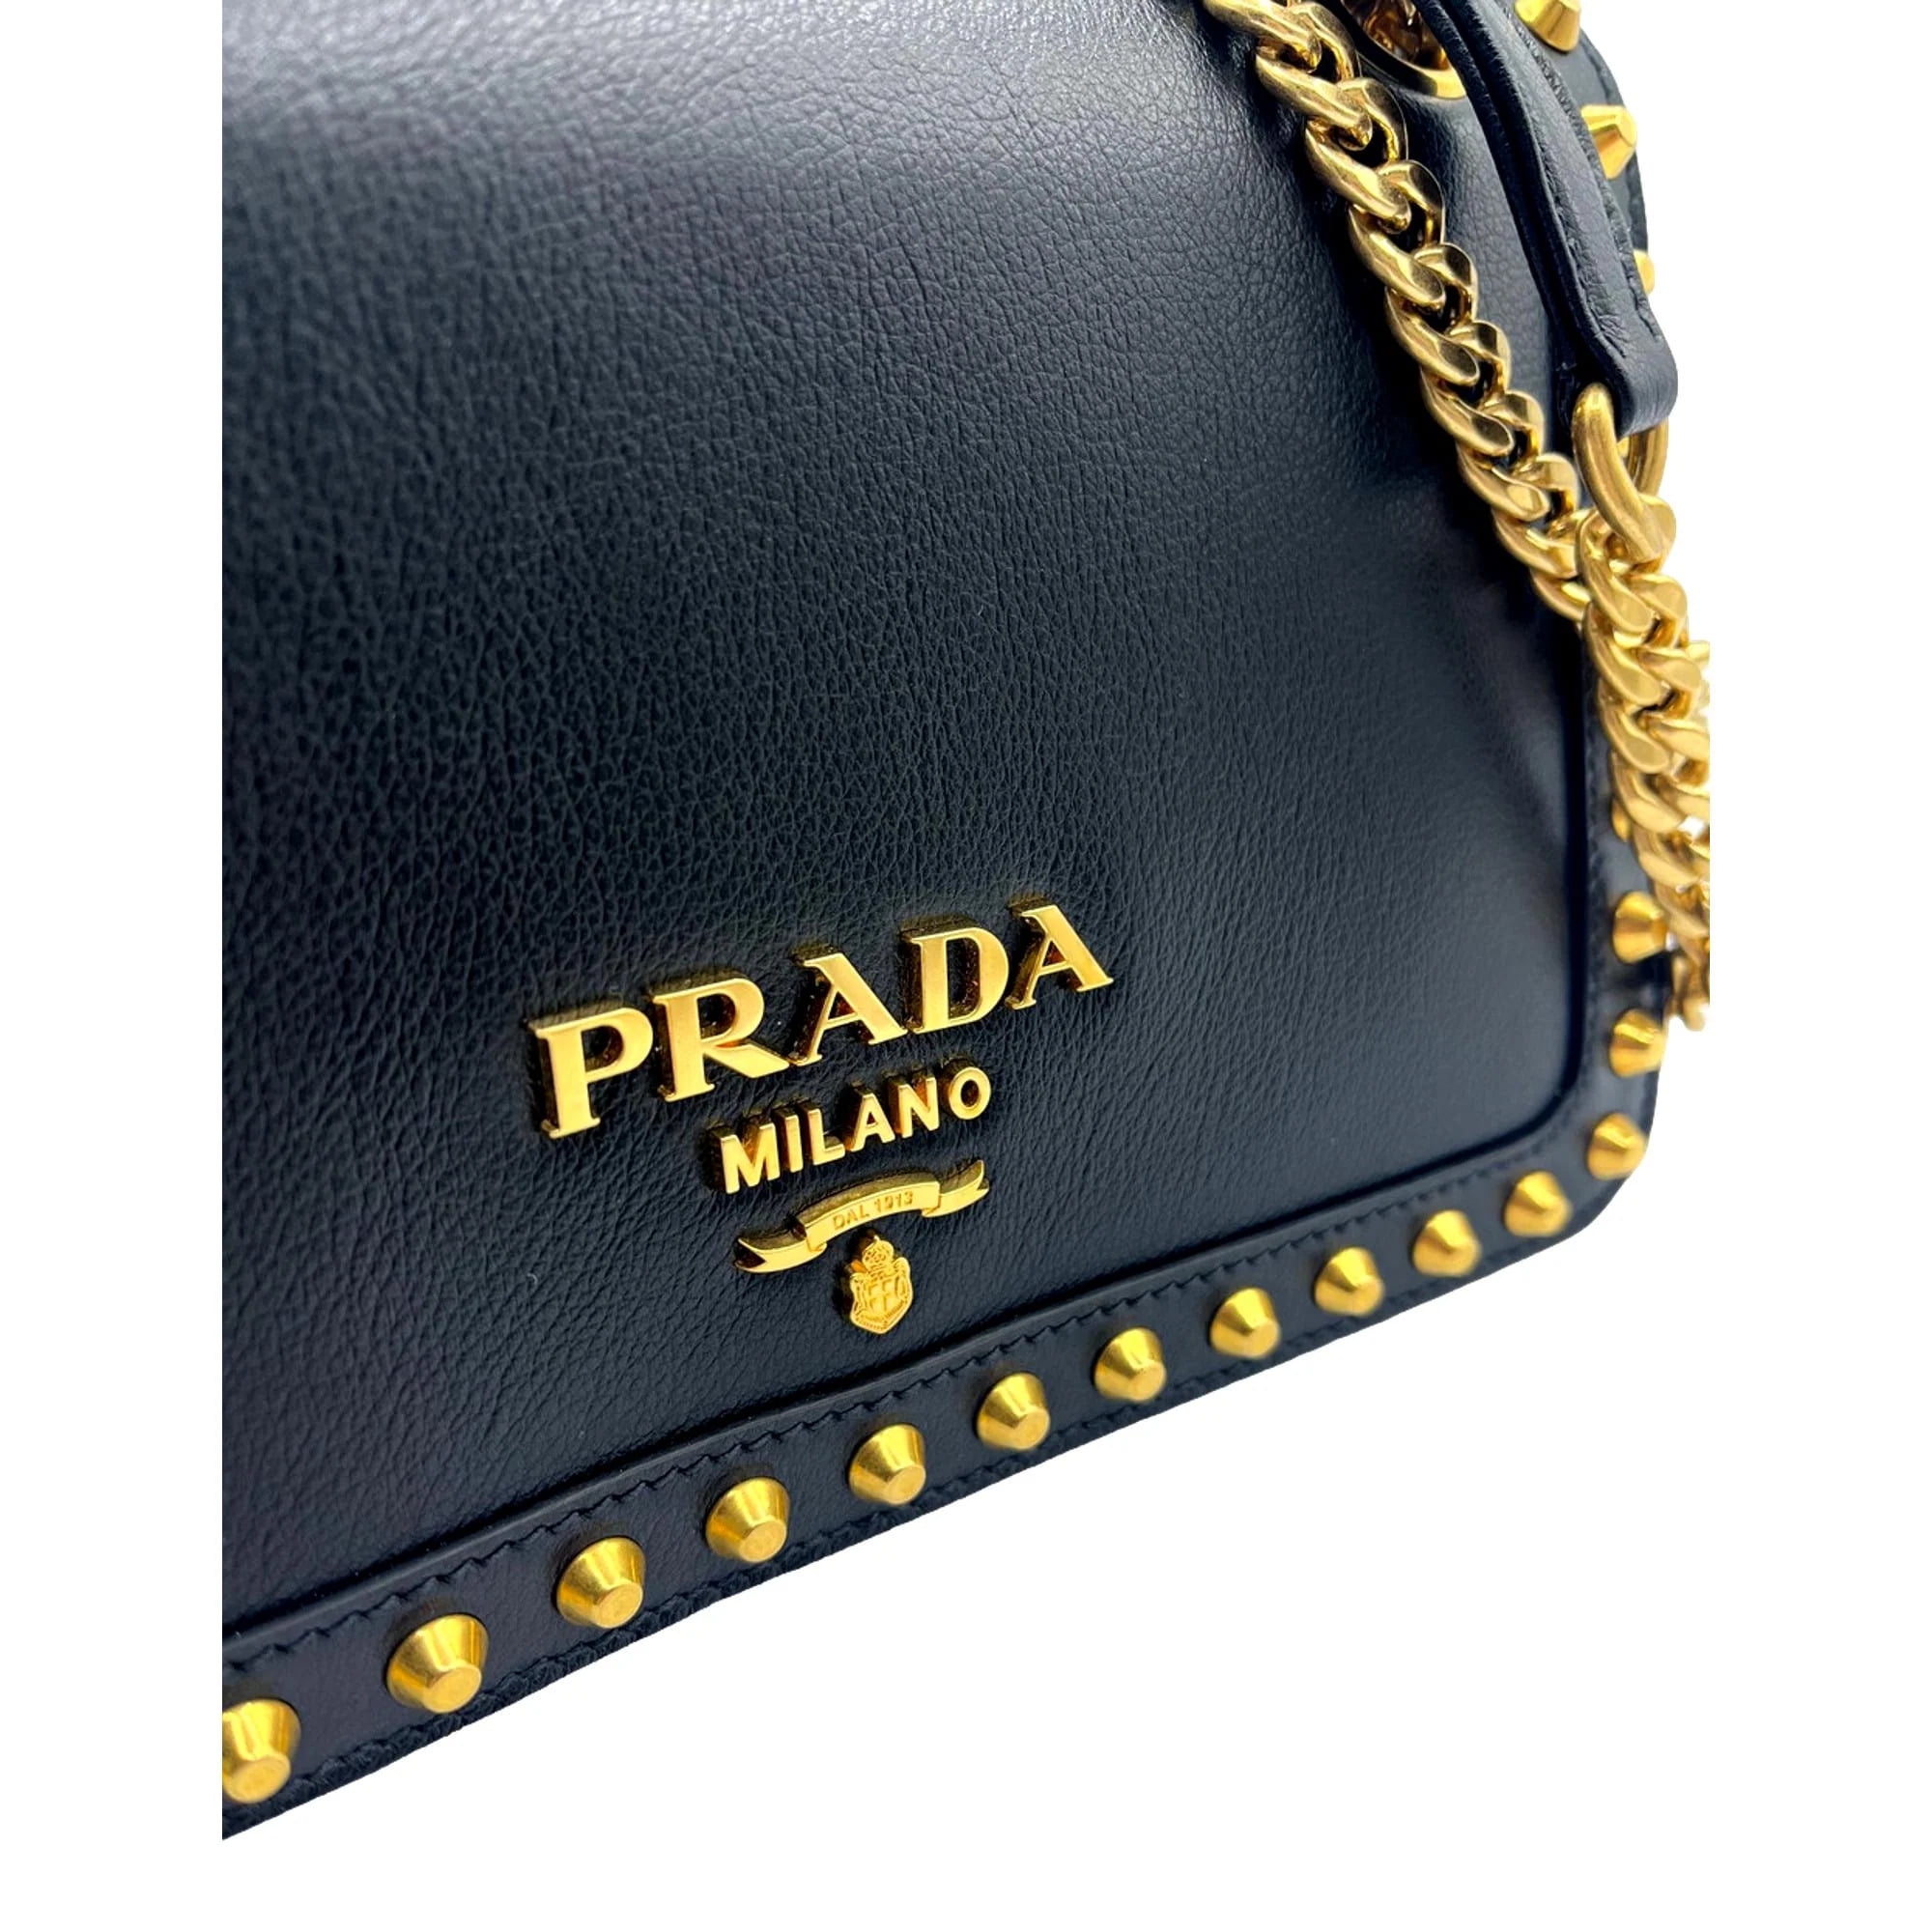 PRADA+Pattina+GLACE+Calf+Leather+Cammeo+Beige+Pattina+Studded+Bag+